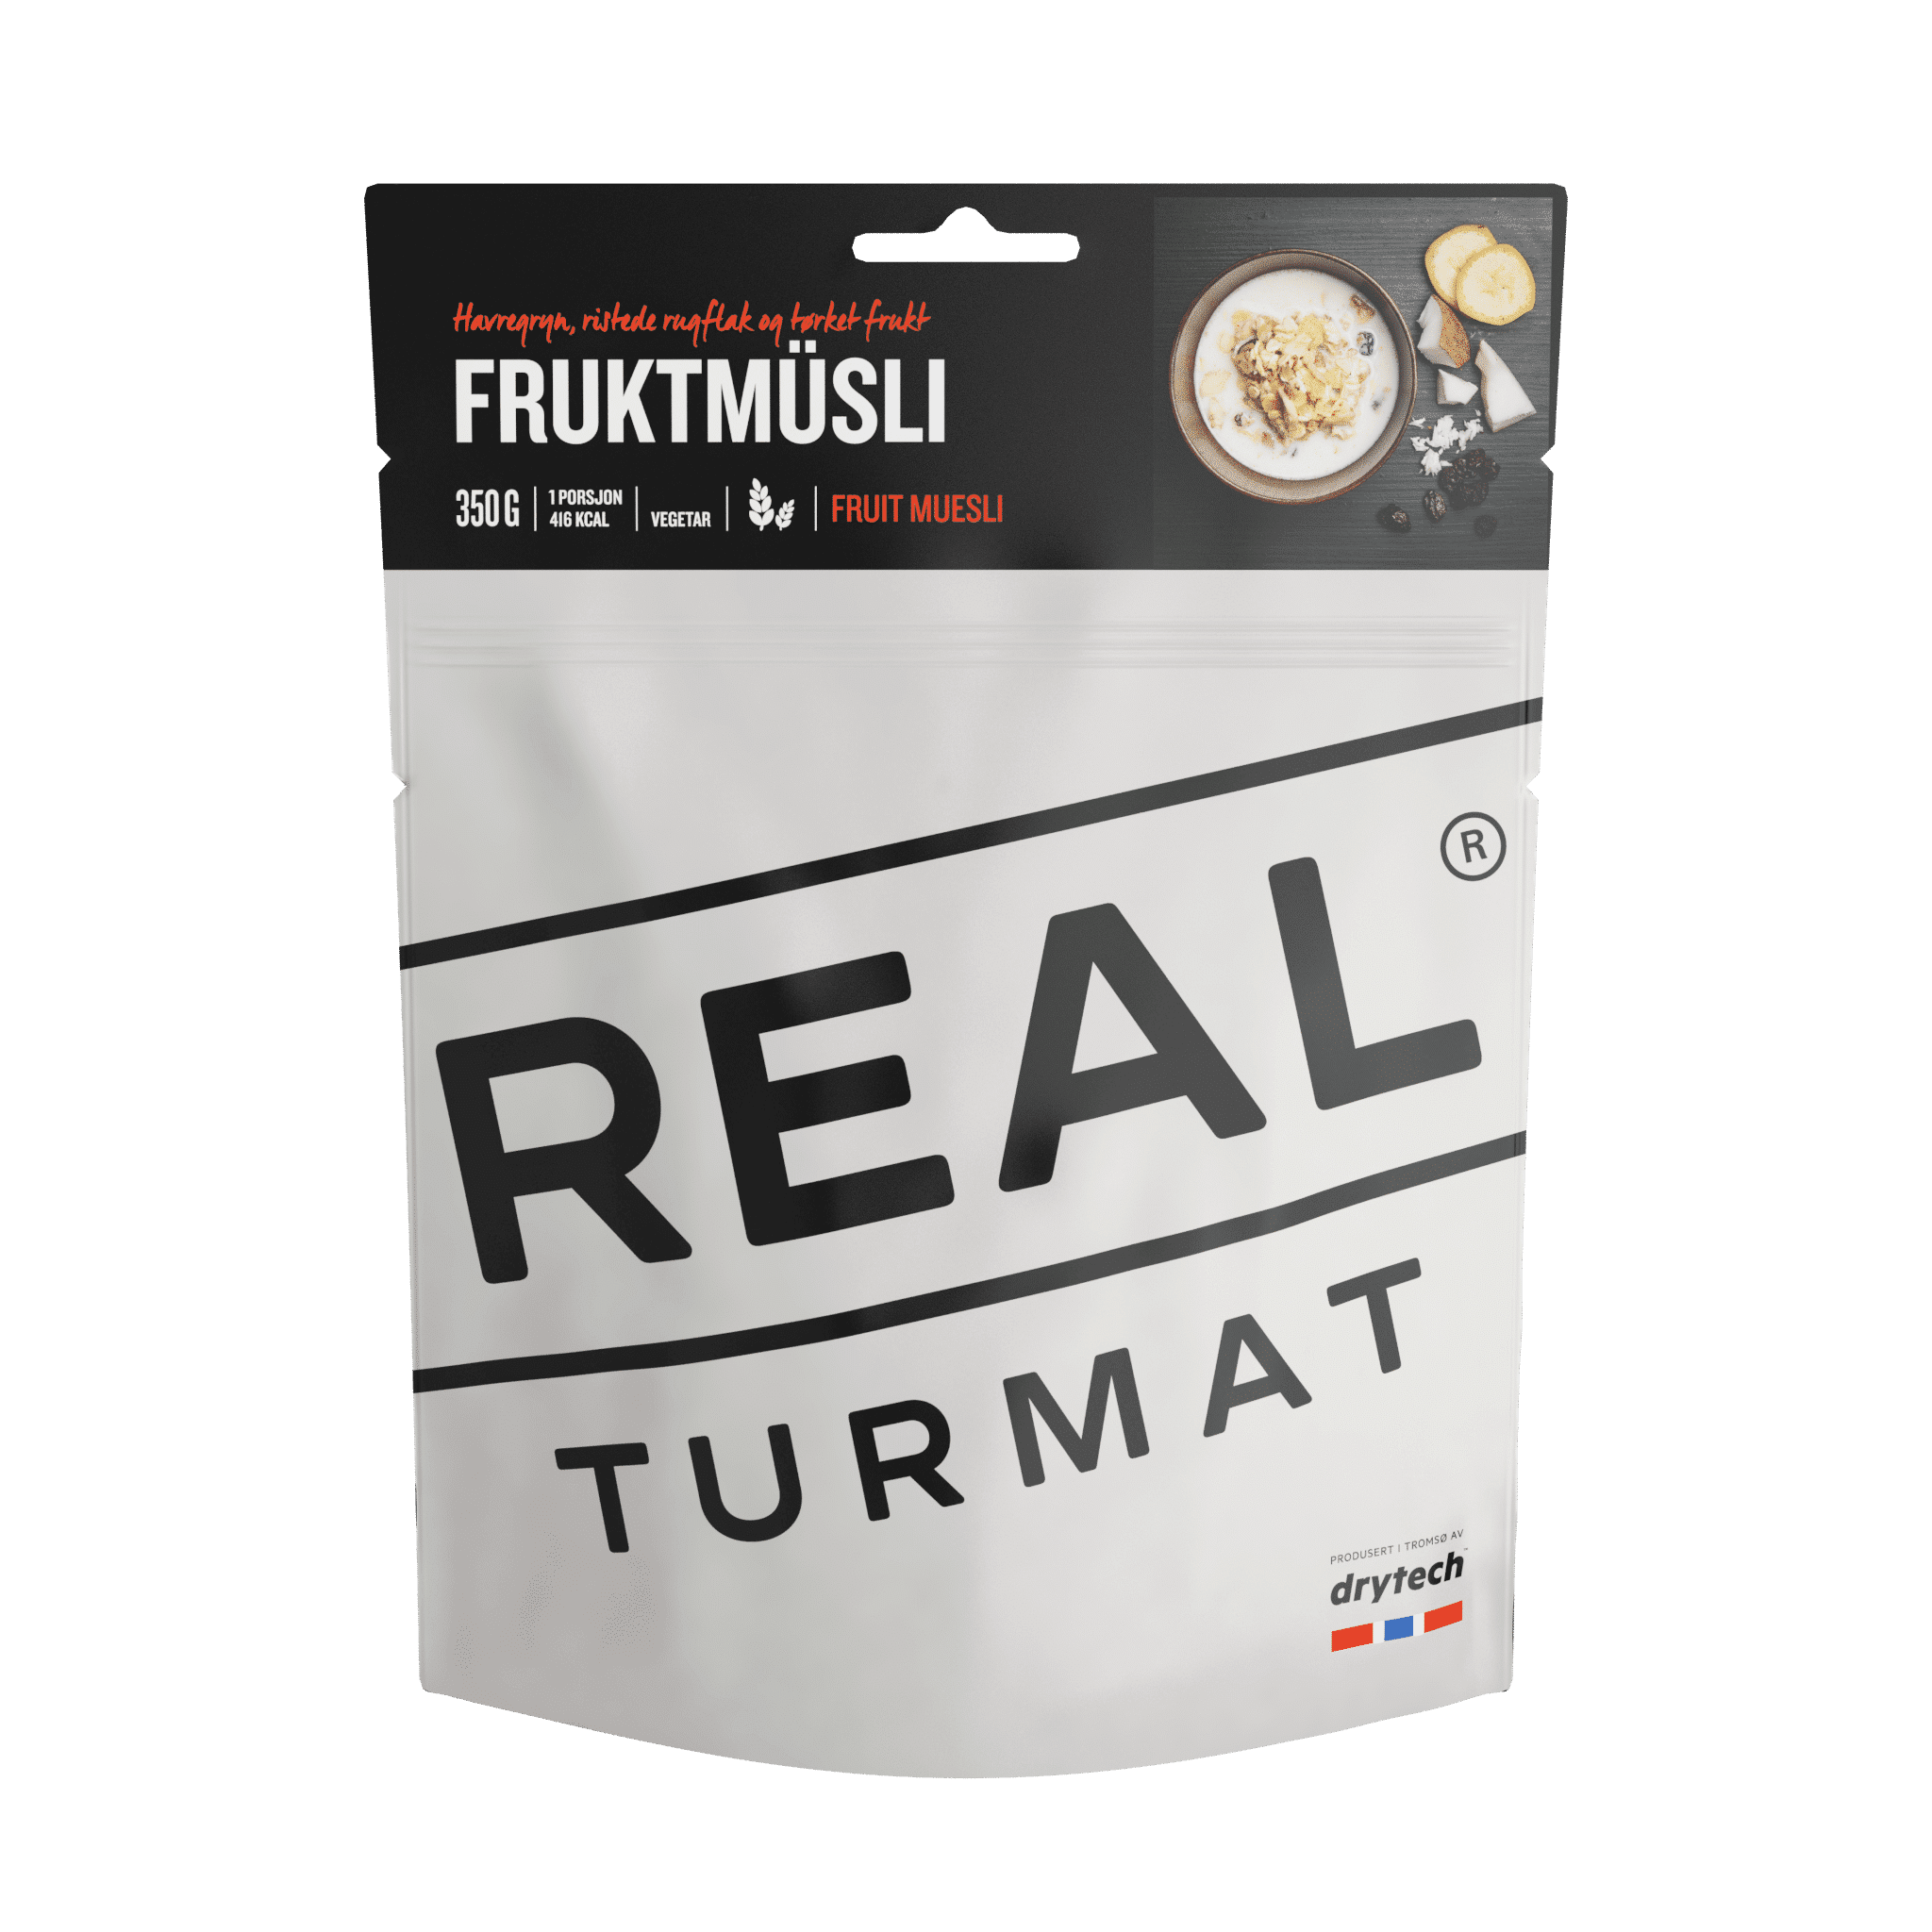 REAL TURMAT FROKOST - Fruit Muesli